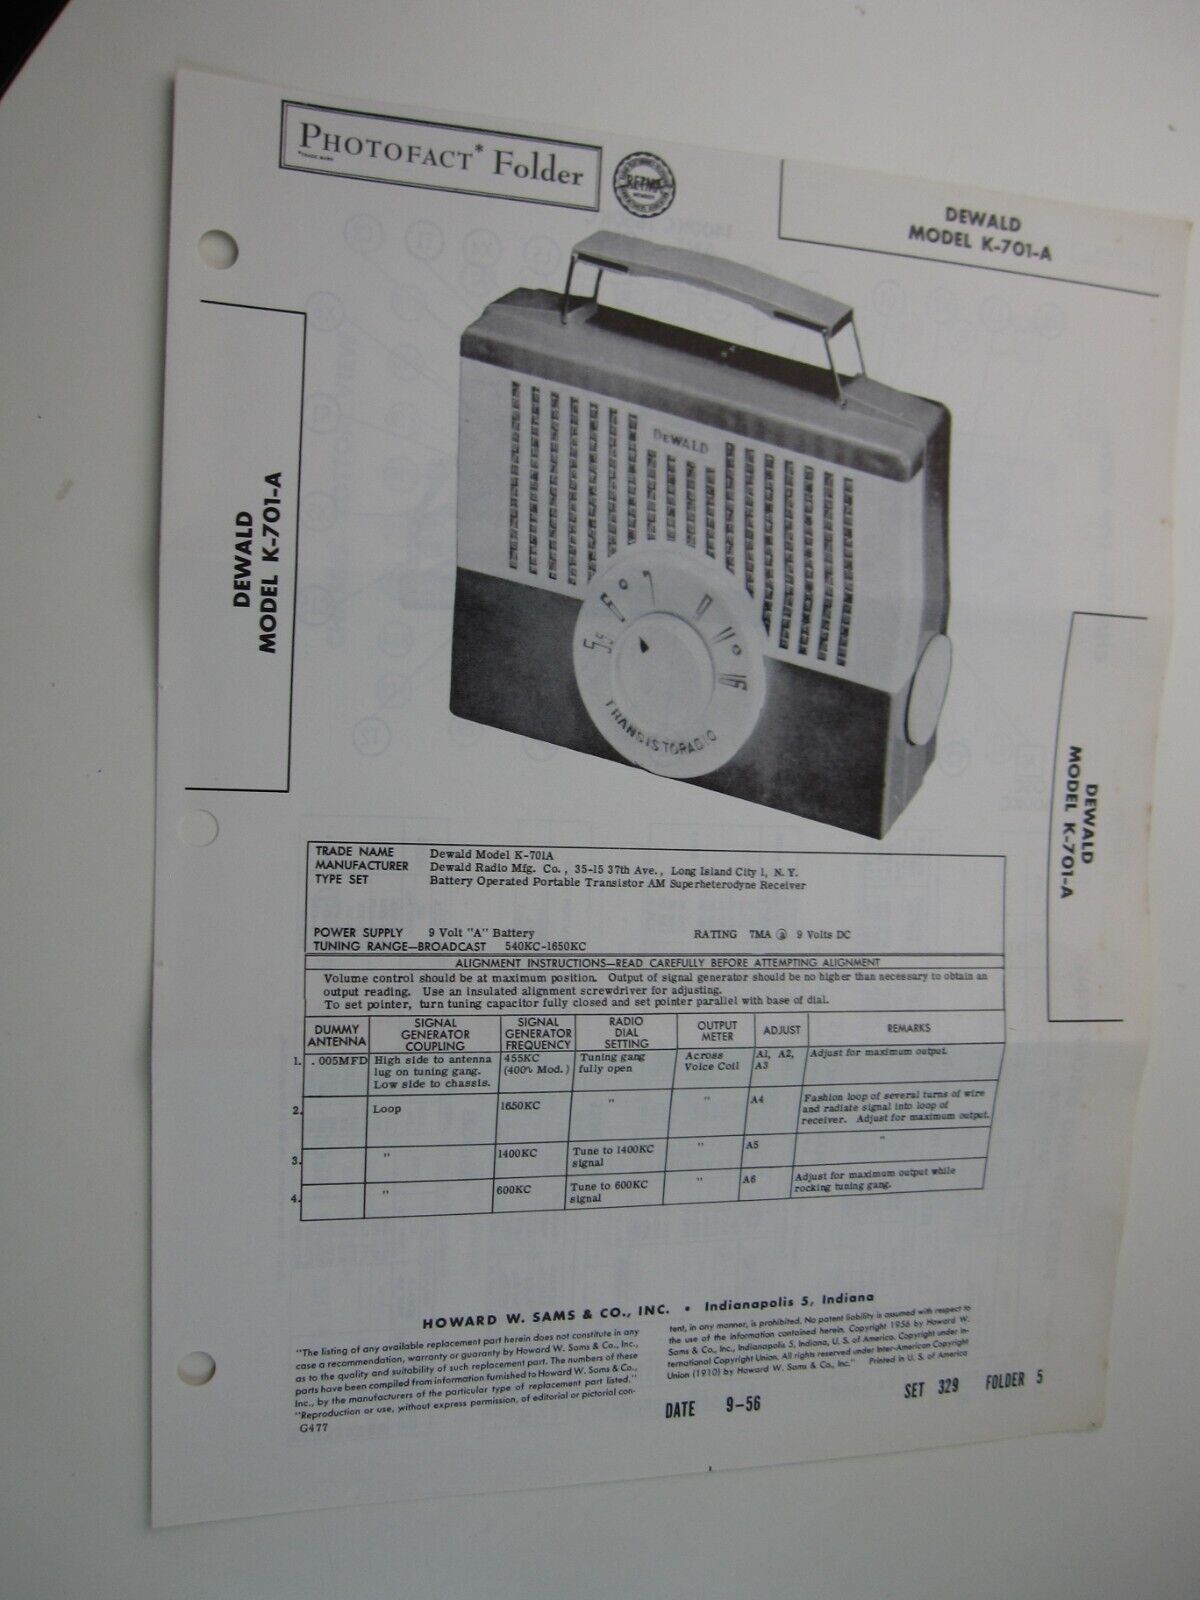 1950's Sams Photofact DEWALD Model K-701-A  BIS